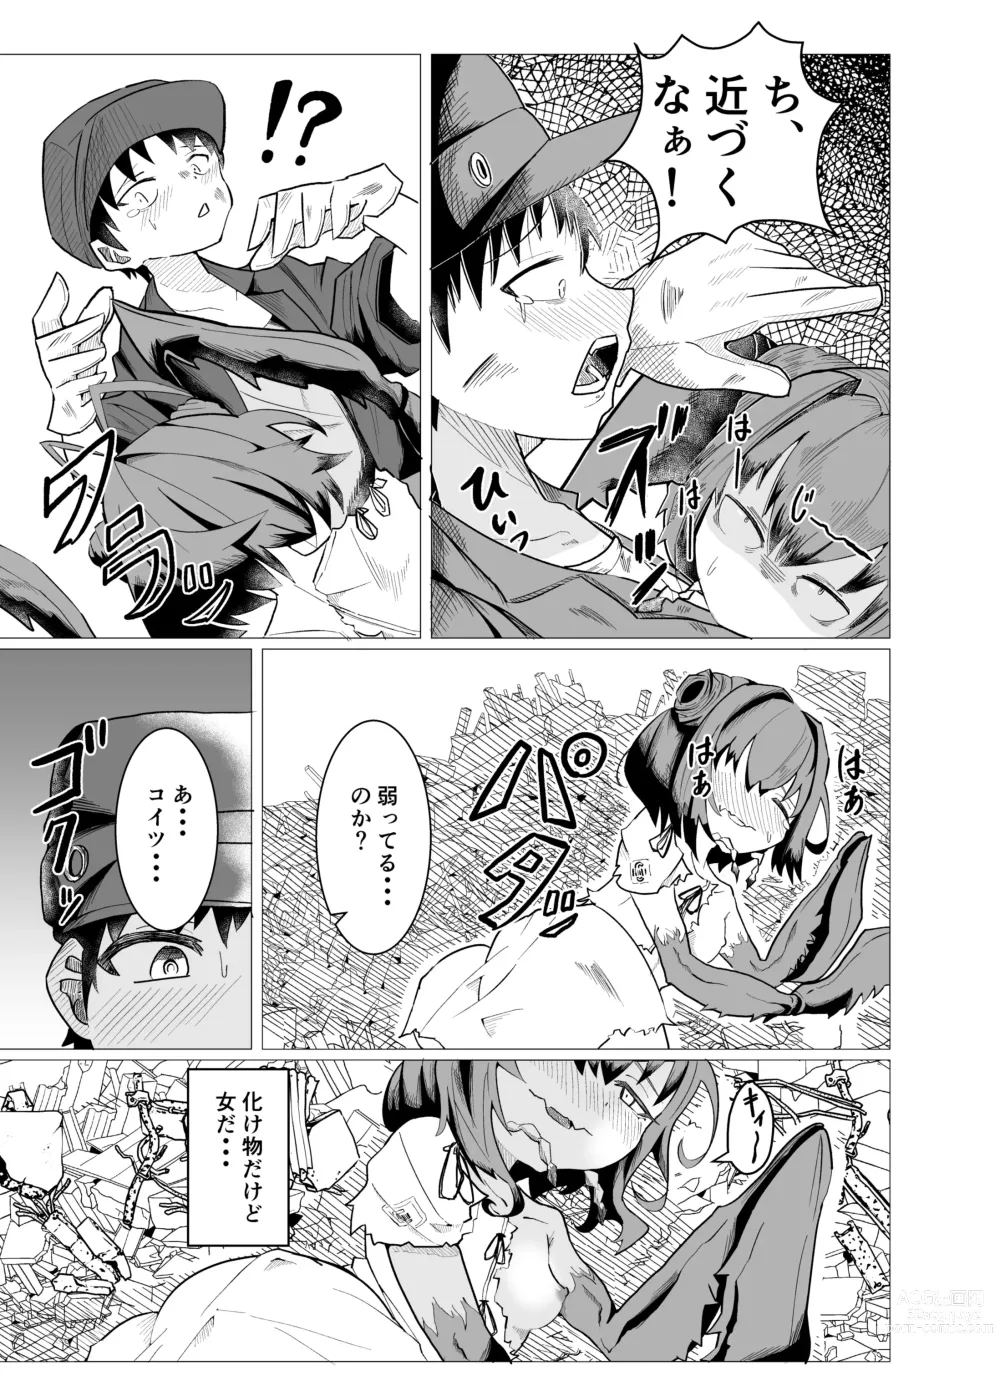 Page 5 of doujinshi kama1JPG